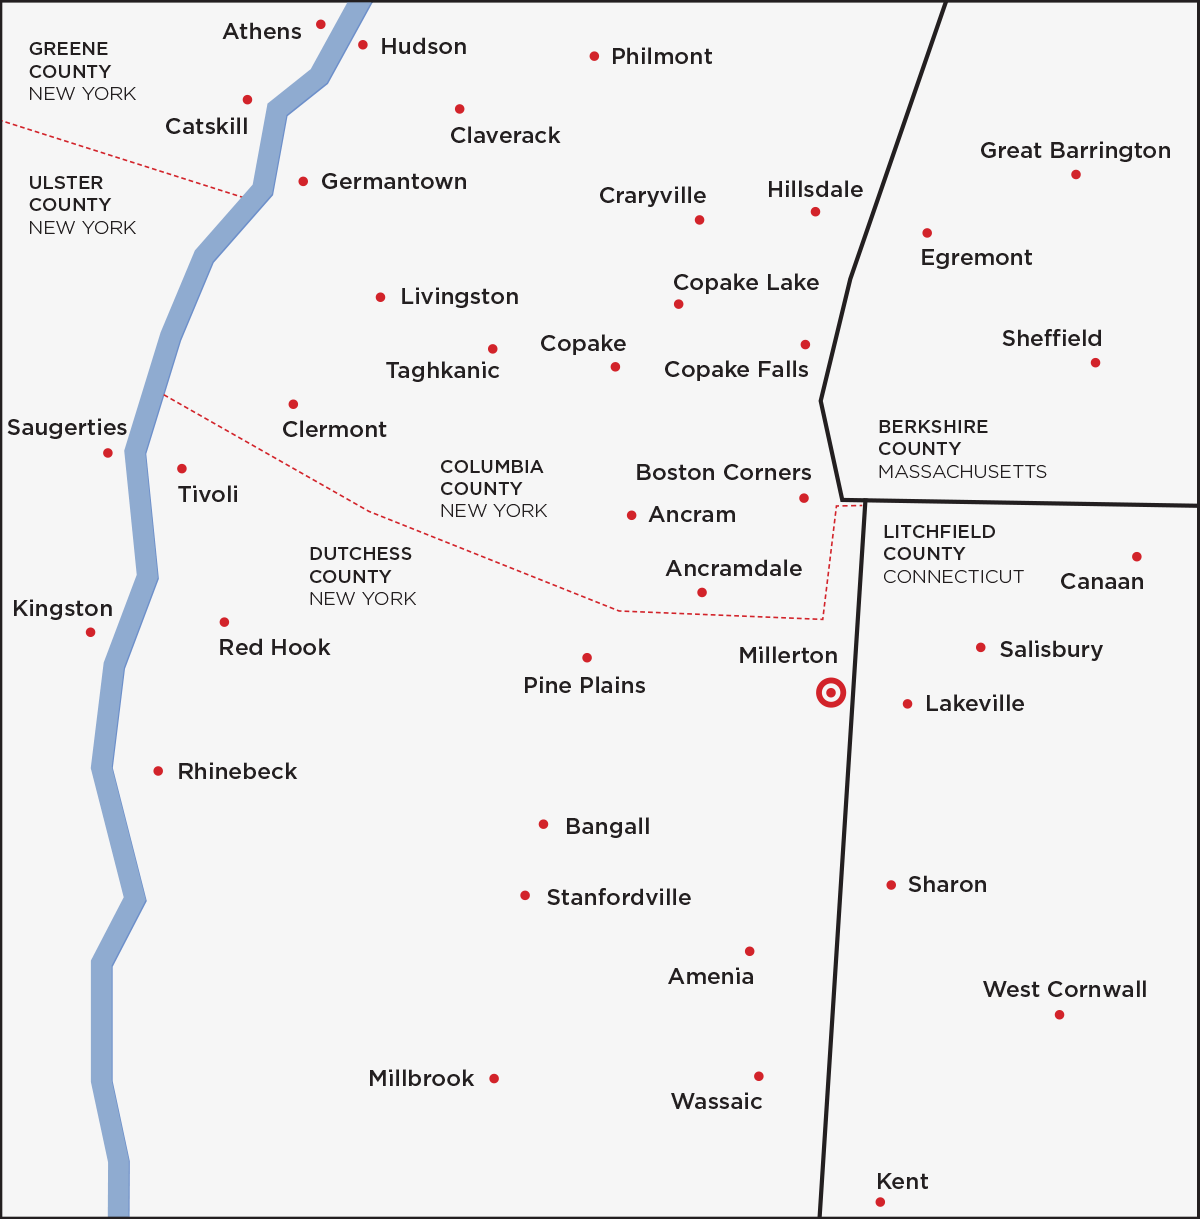 Main Street Magazine's Distribution Map